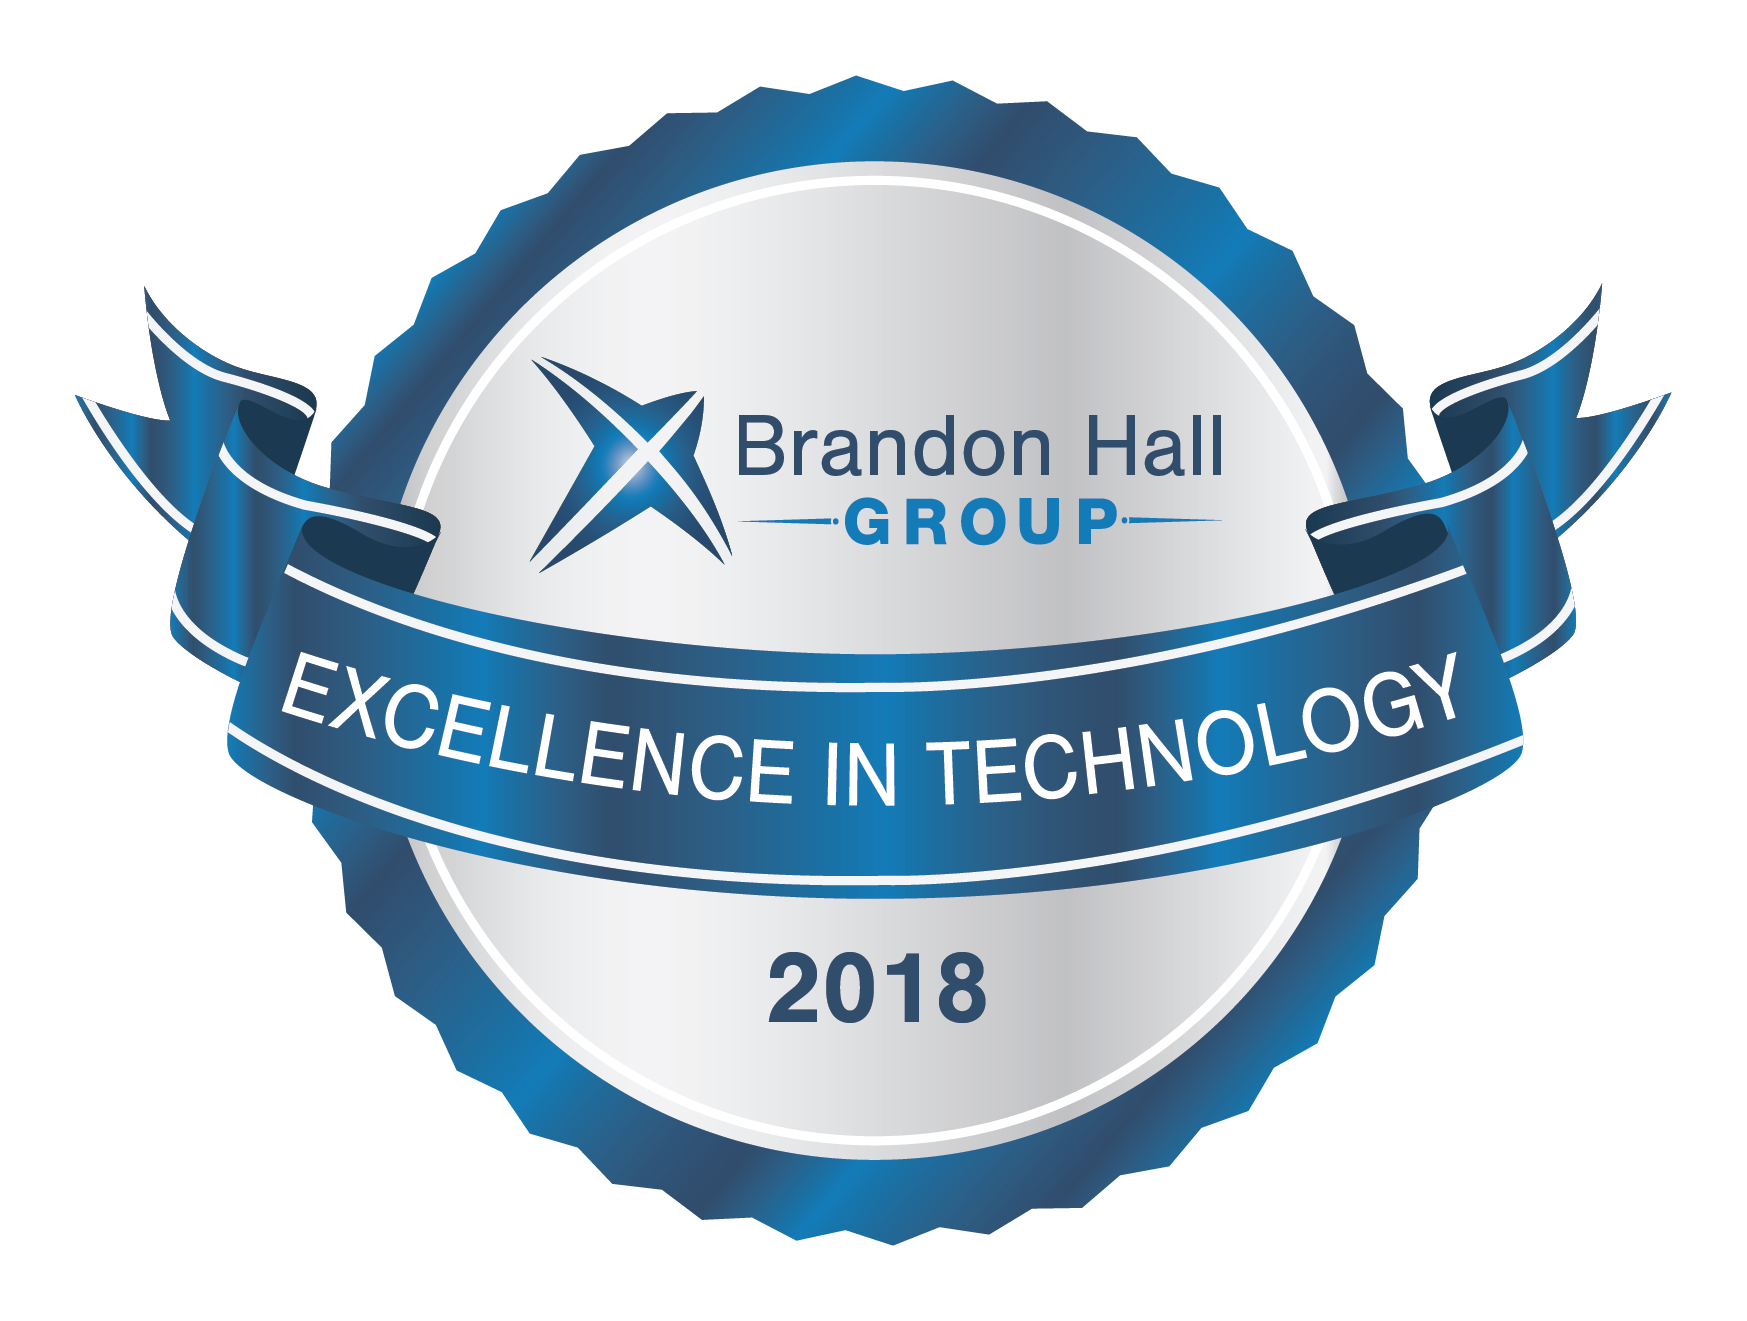 Hall group. HCM 2020. Tech Awards лого. Логотип превосходство. Brandon Hall Technology Awards.